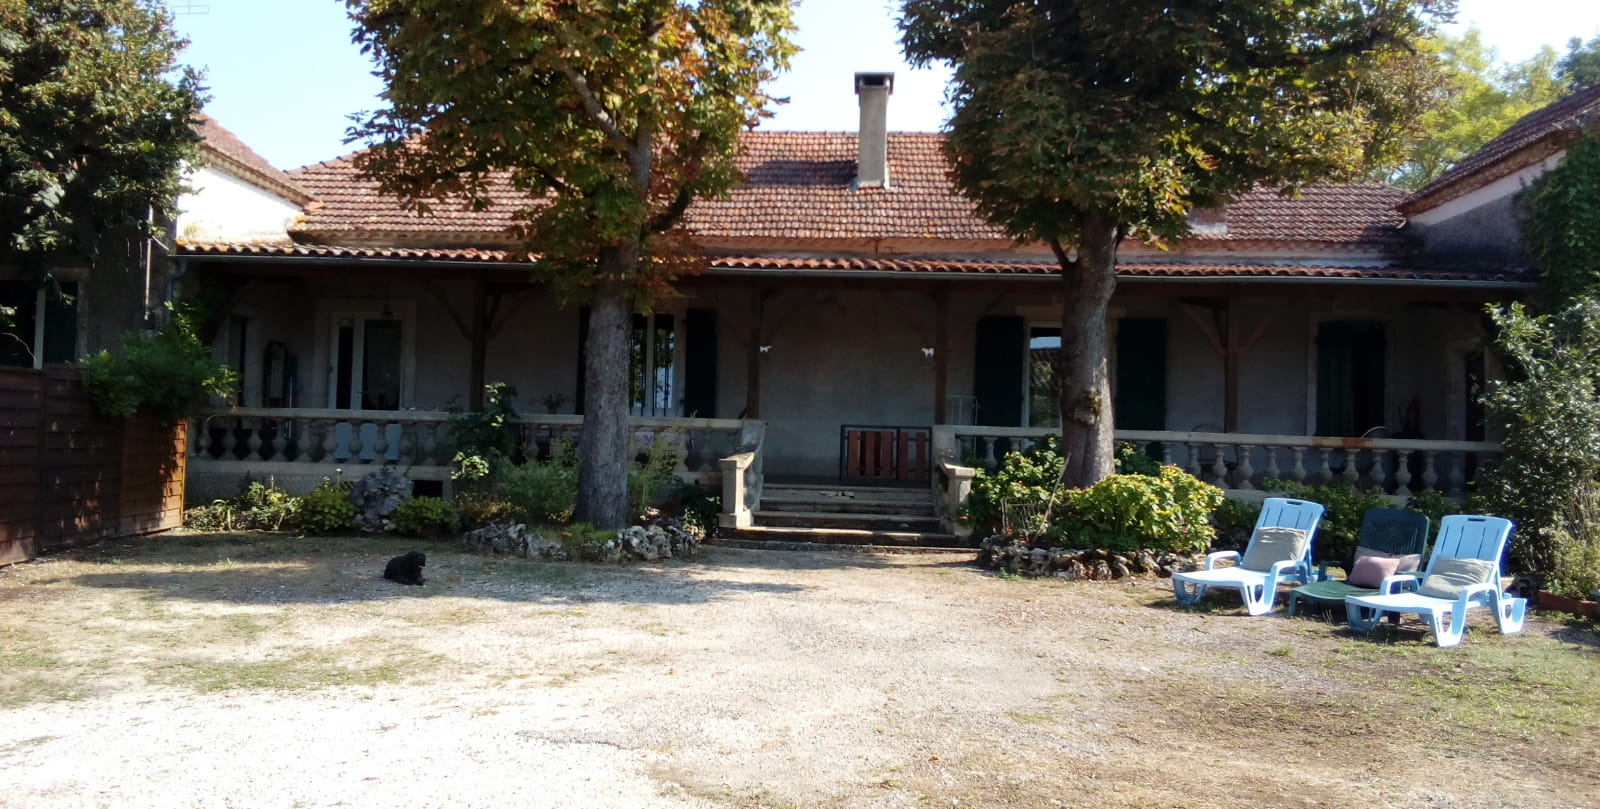 Foissac cottage